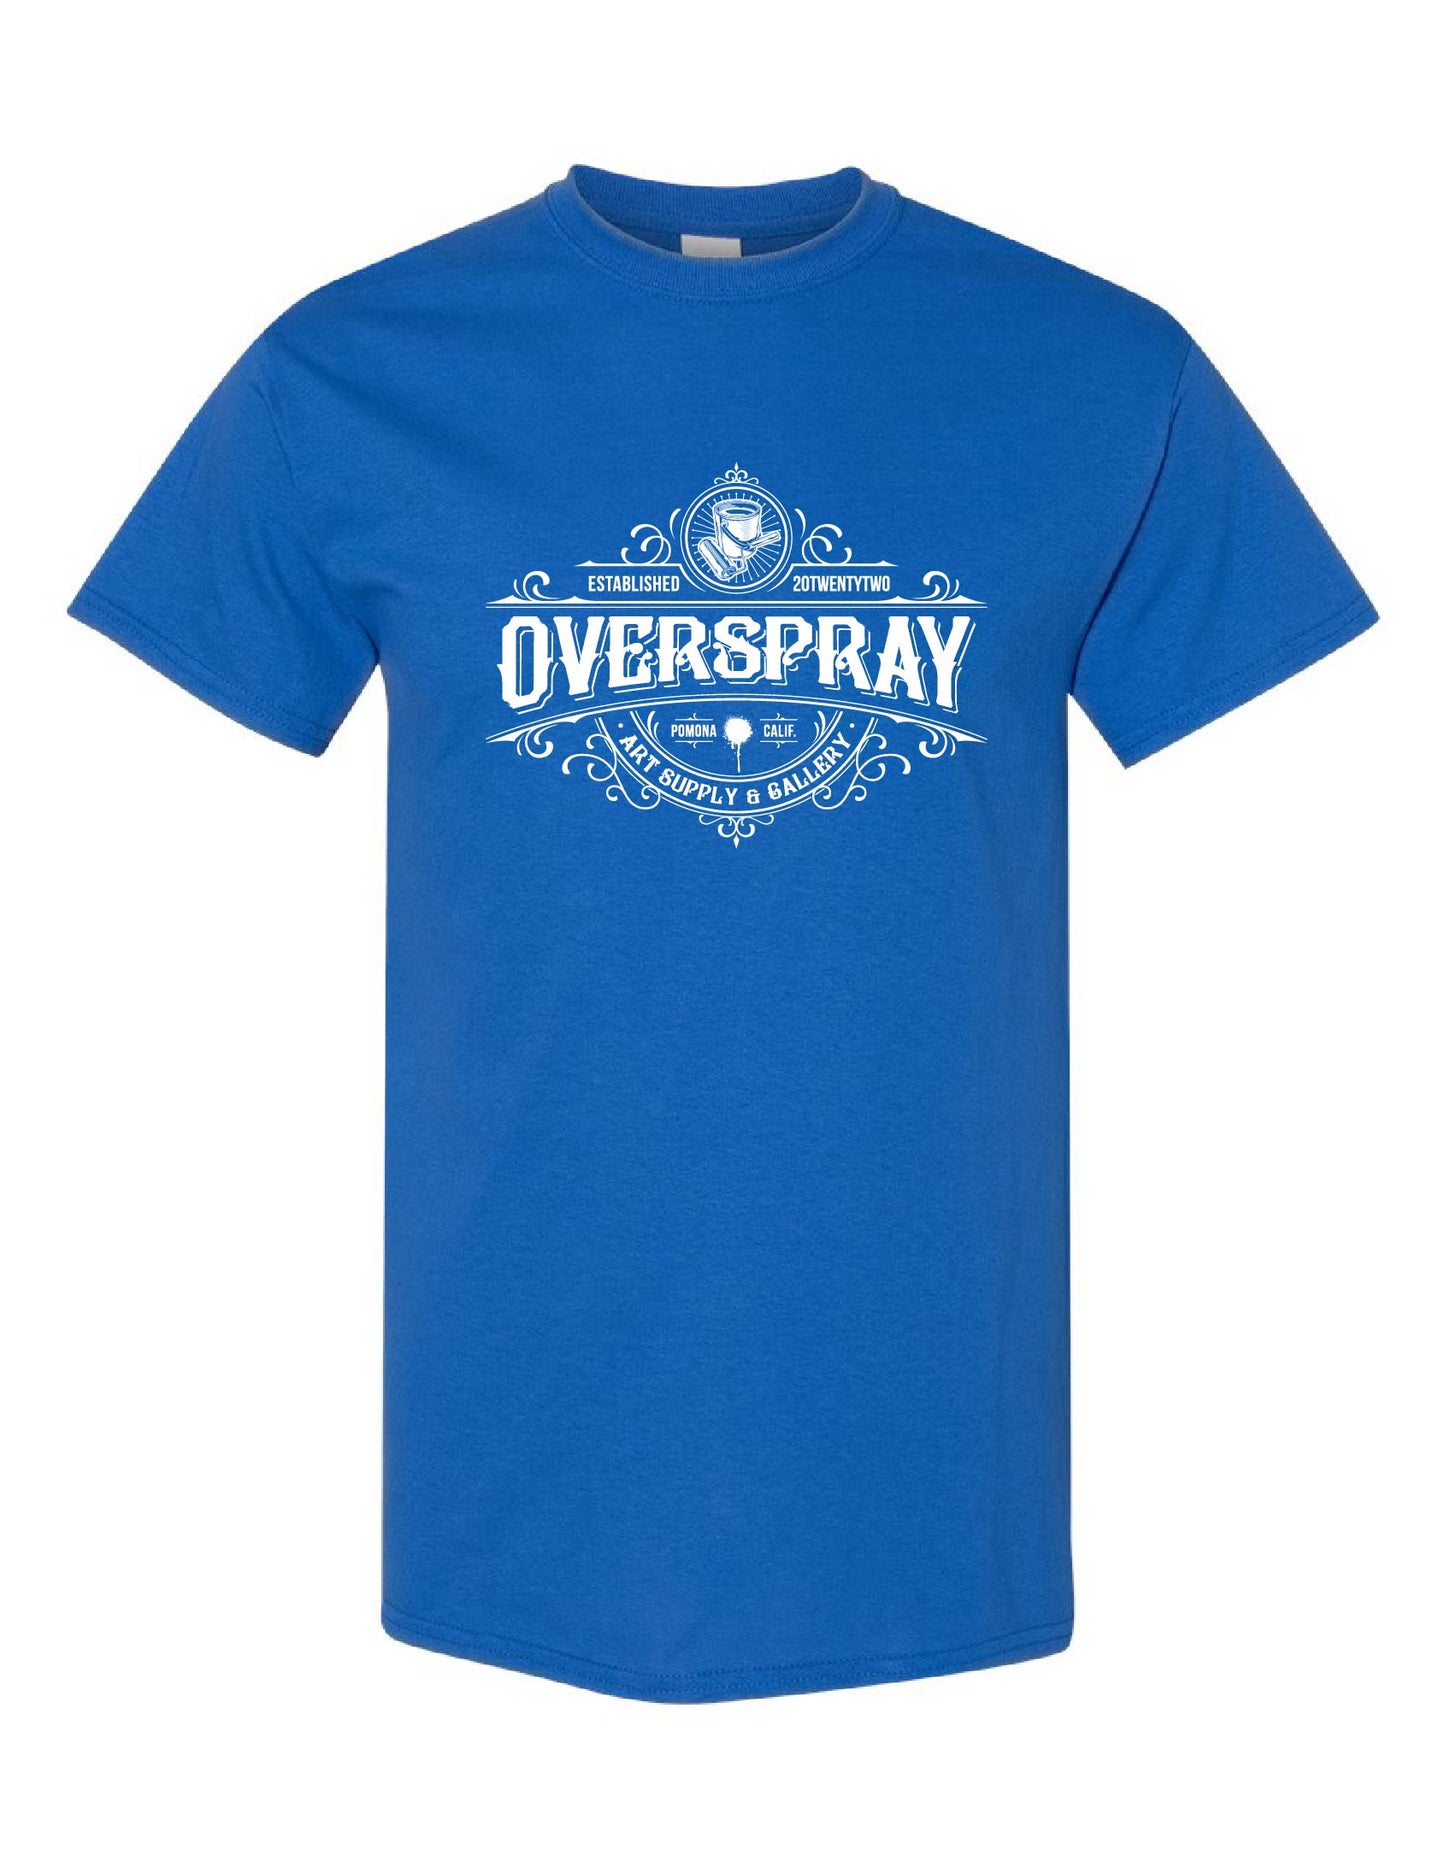 Overspray Vintage T-shirt